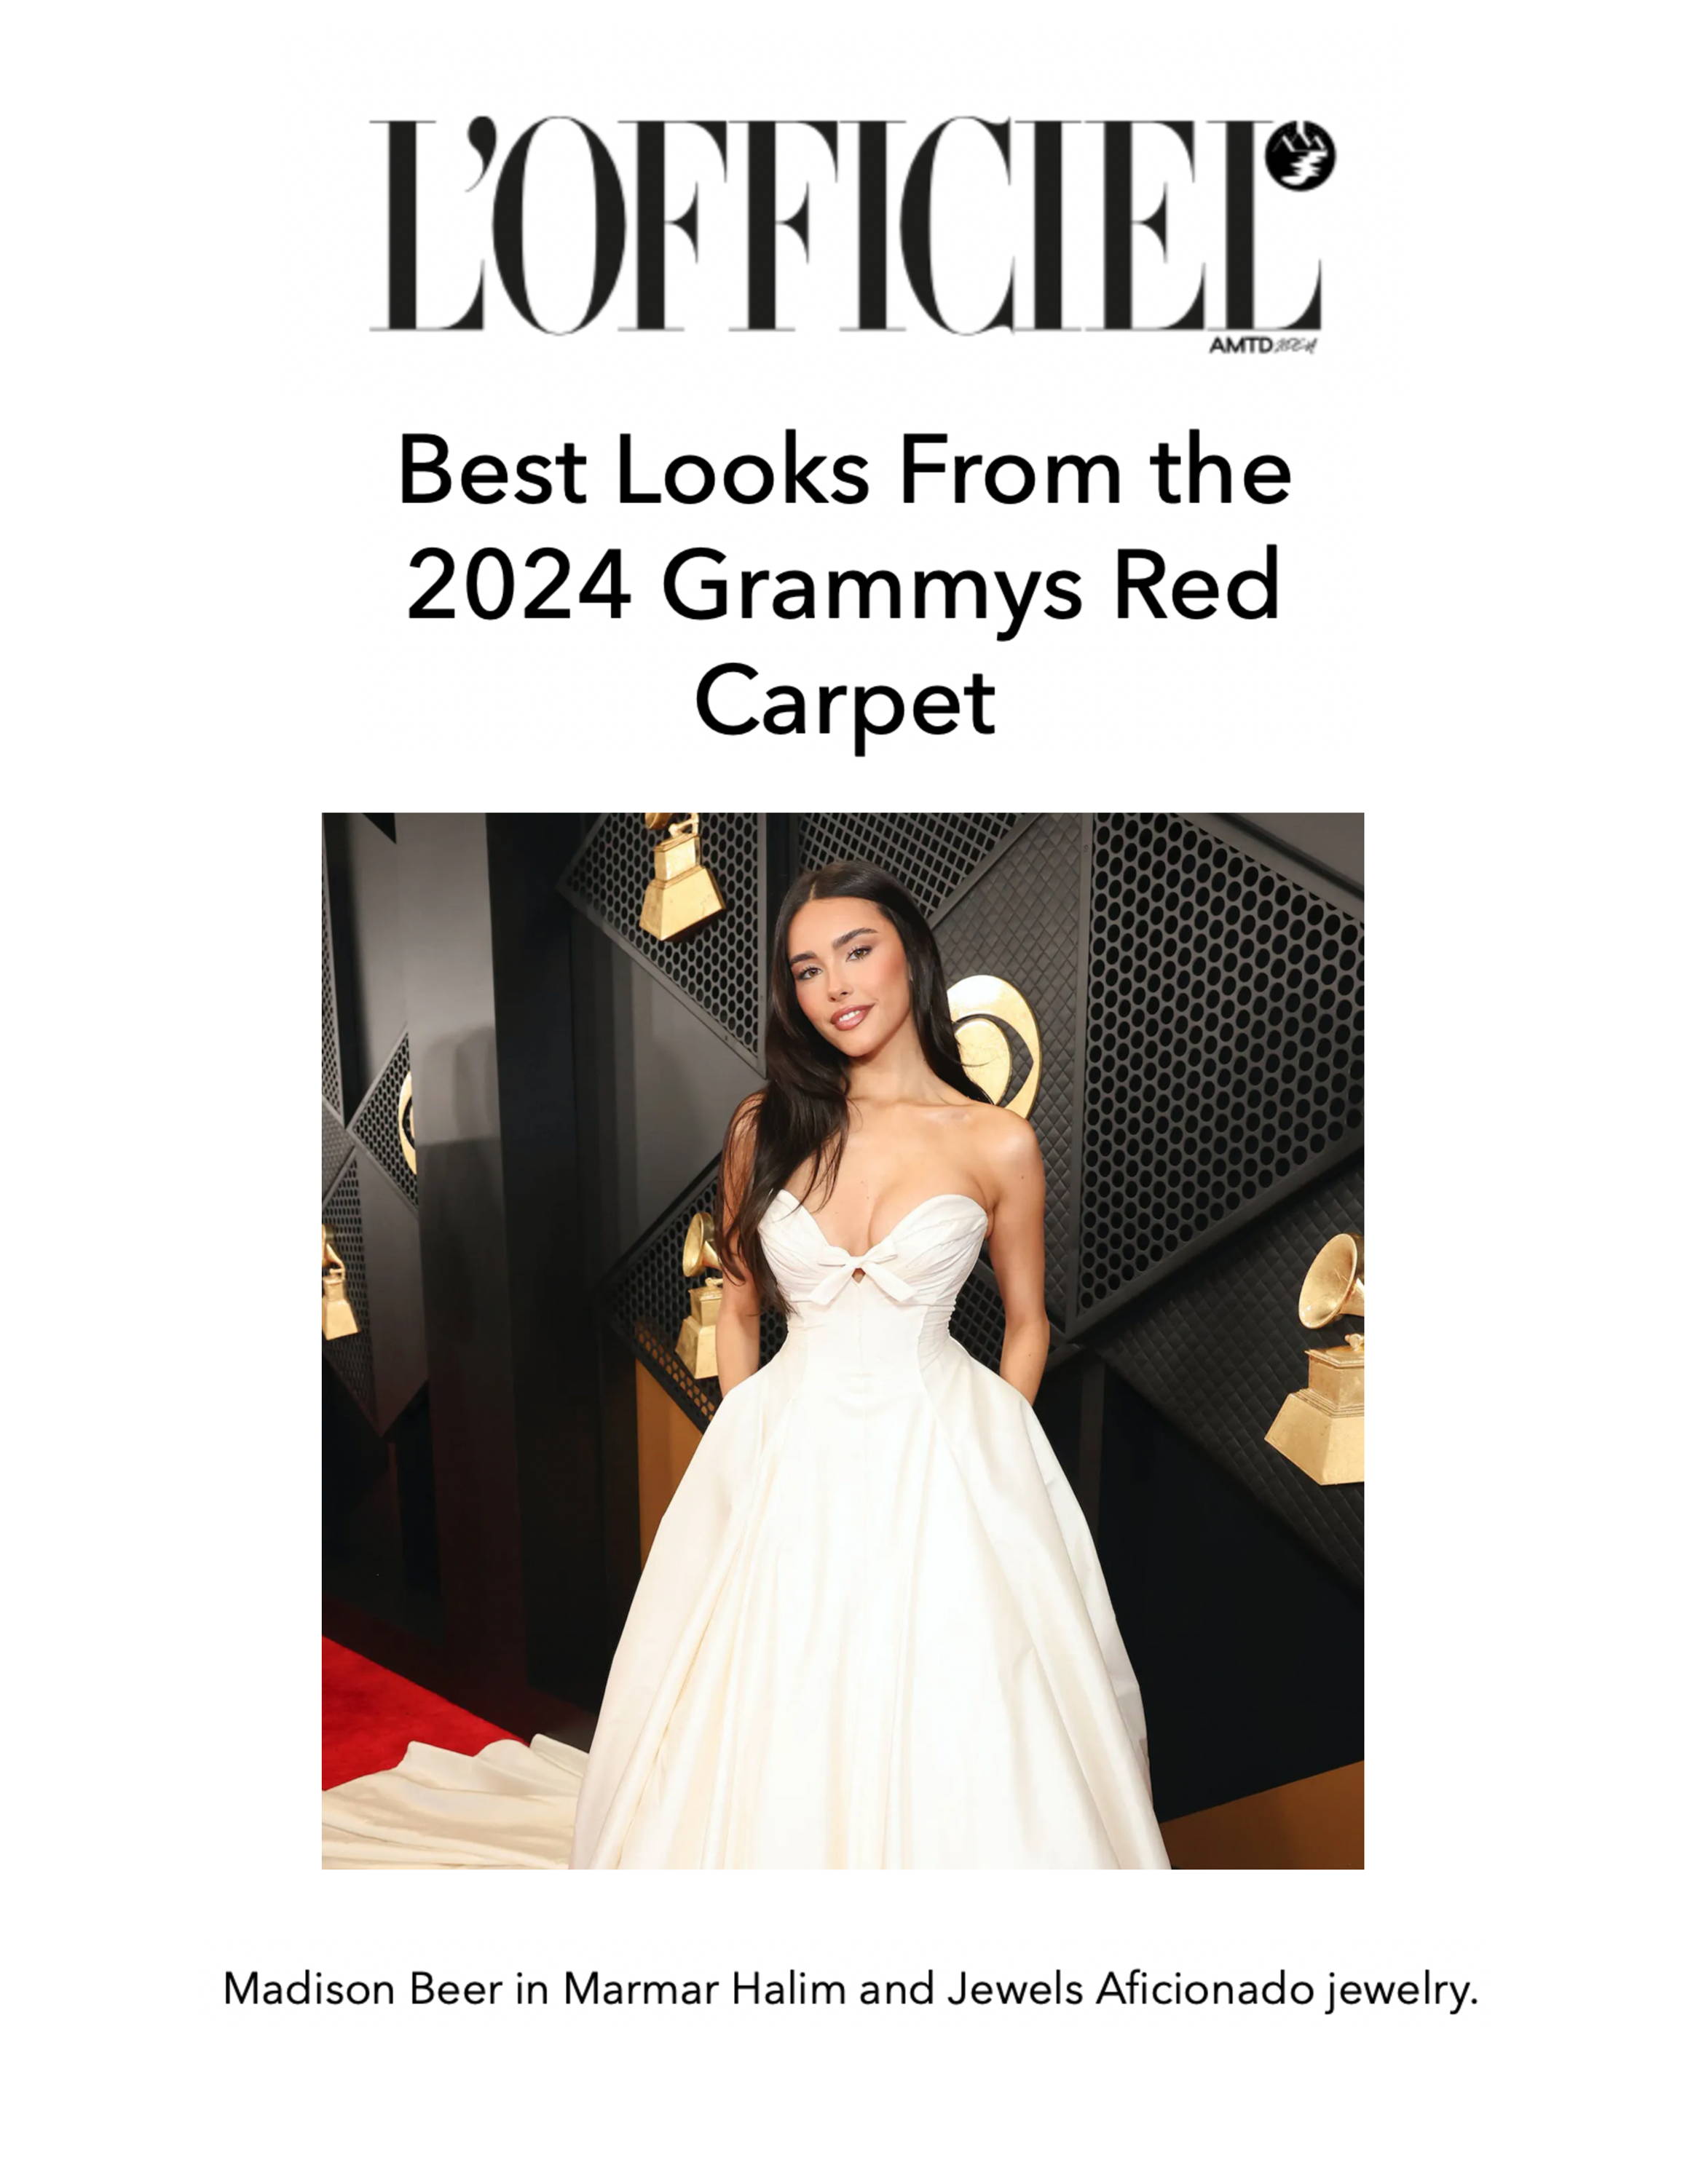 https://www.lofficielusa.com/fashion/2024-grammys-red-carpet-fashion-style#:~:text=Madison%20Beer%20in%20Marmar%20Halim%20and%20Jewels%20Aficionado%20jewelry.